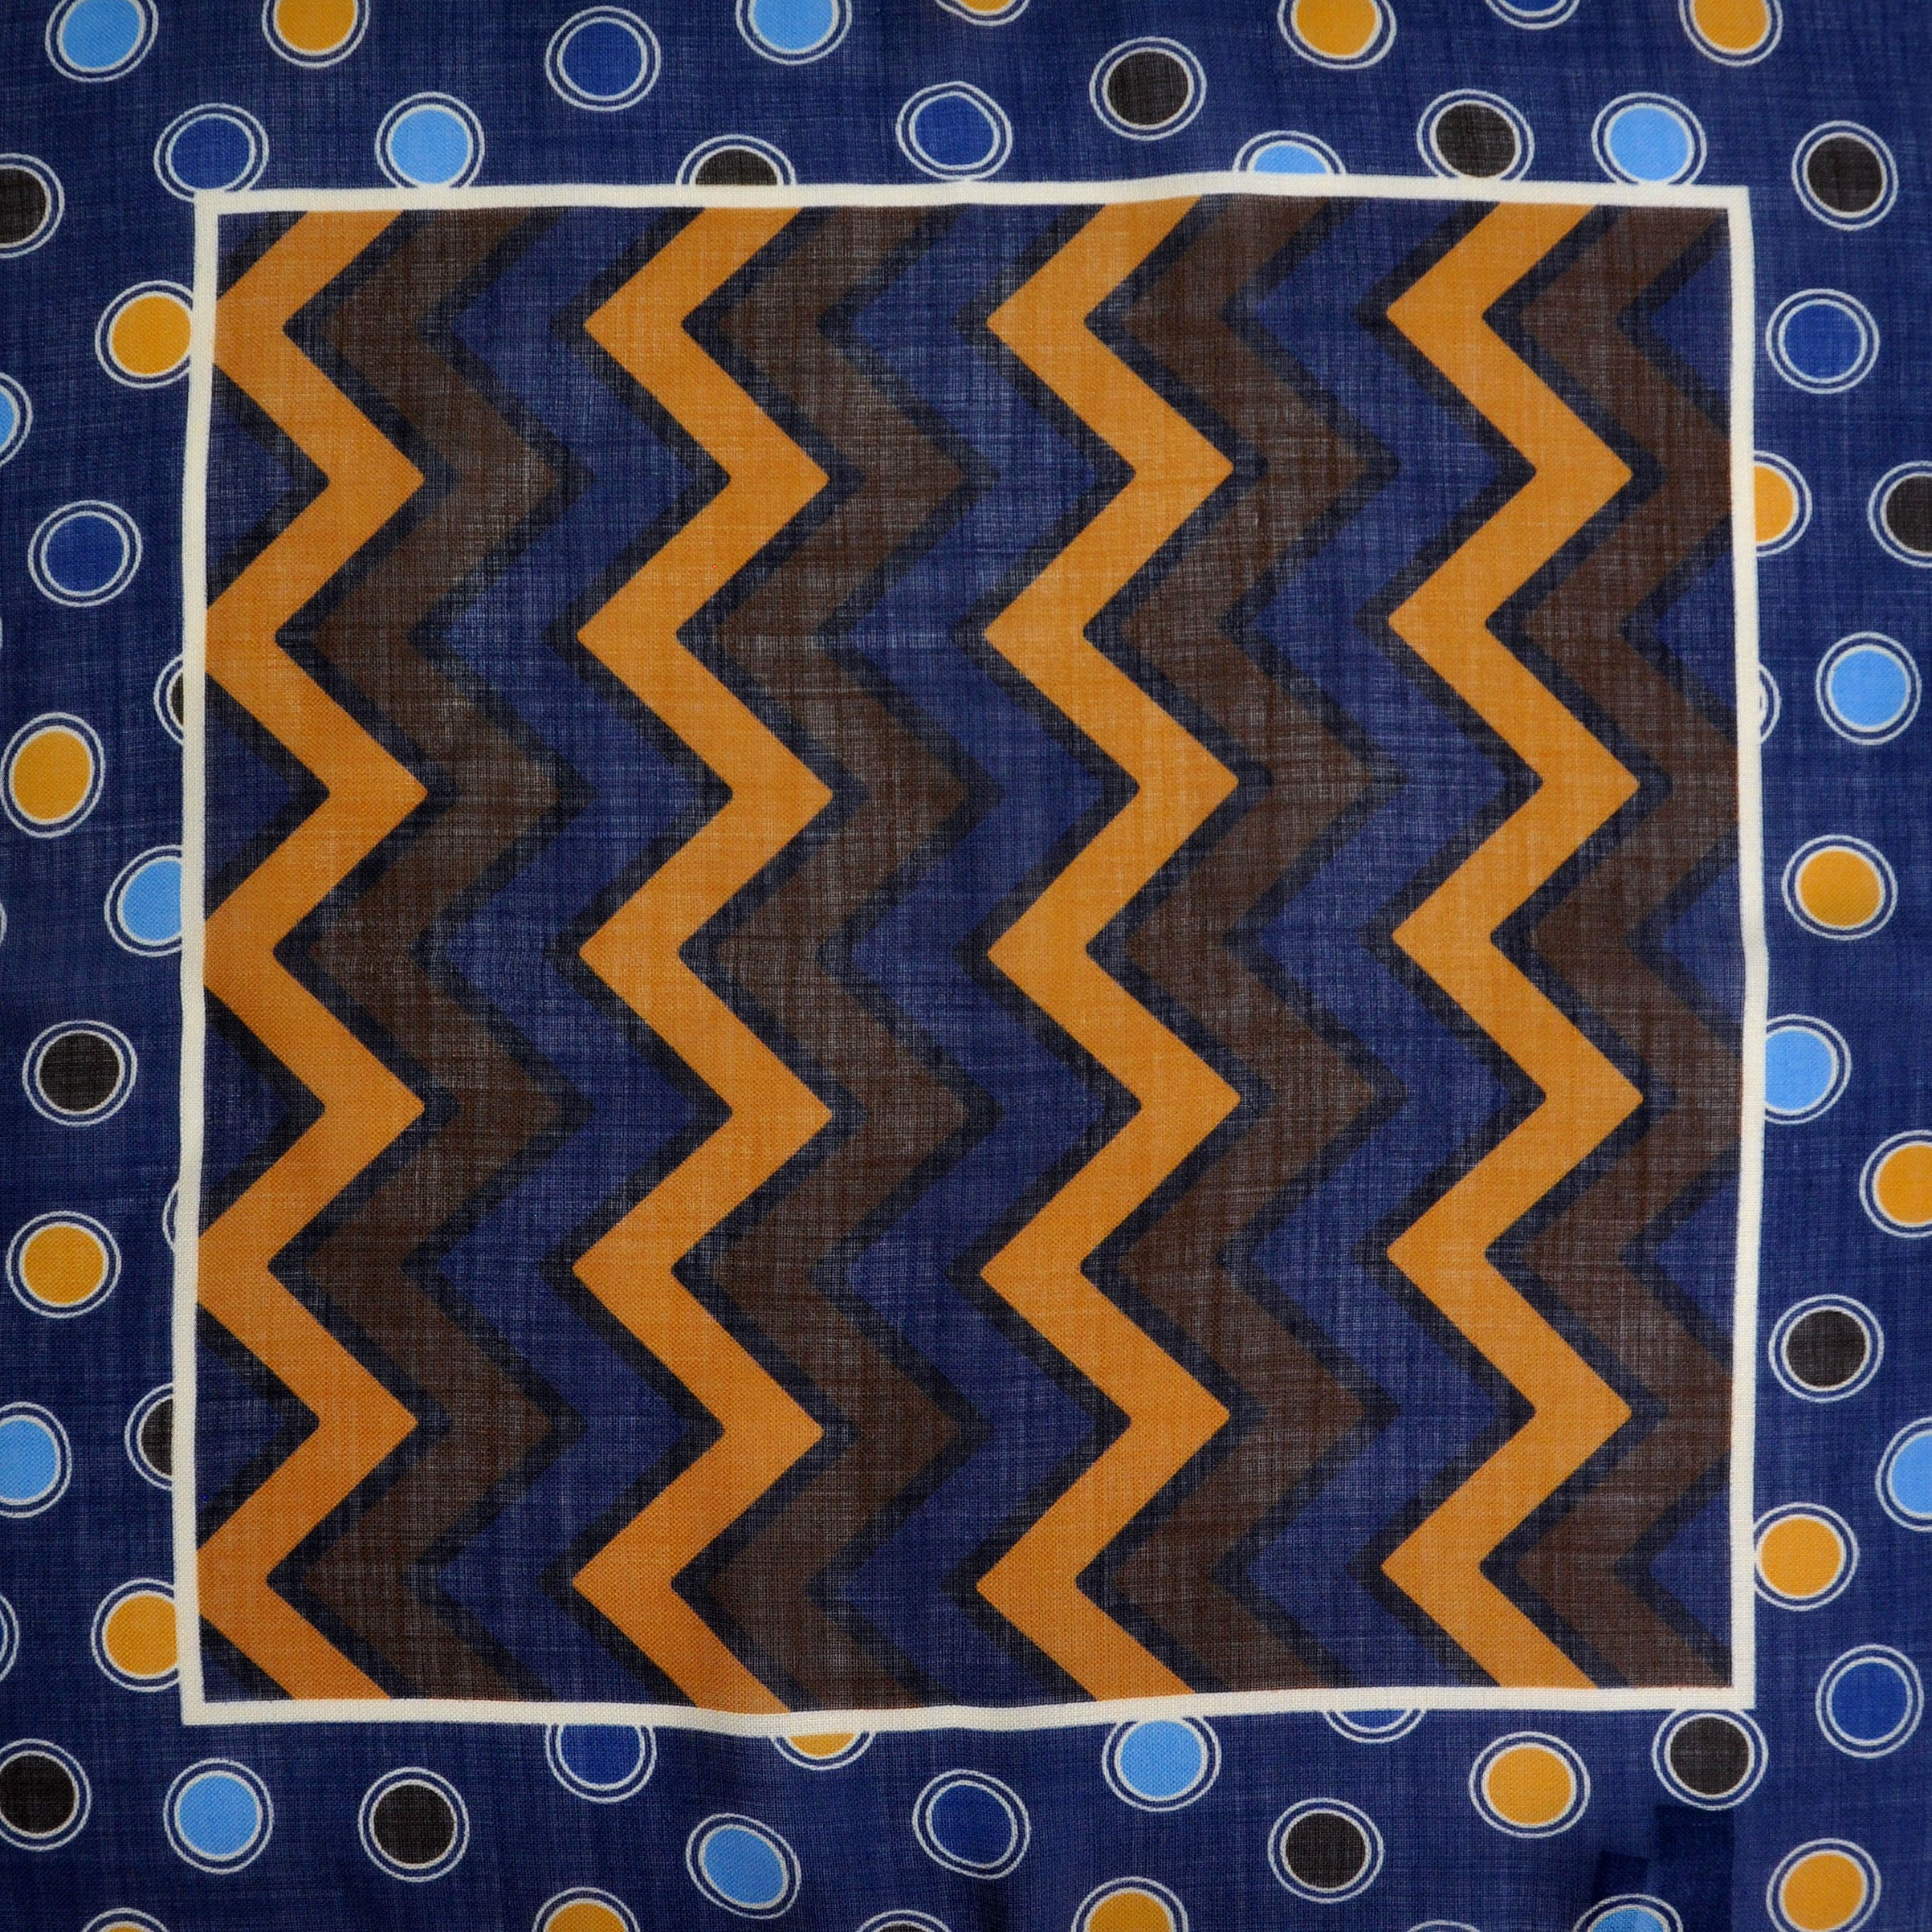 Chevrons & Spots Wool & Silk Pocket Square in Blue, Brown, Ochre & Navy